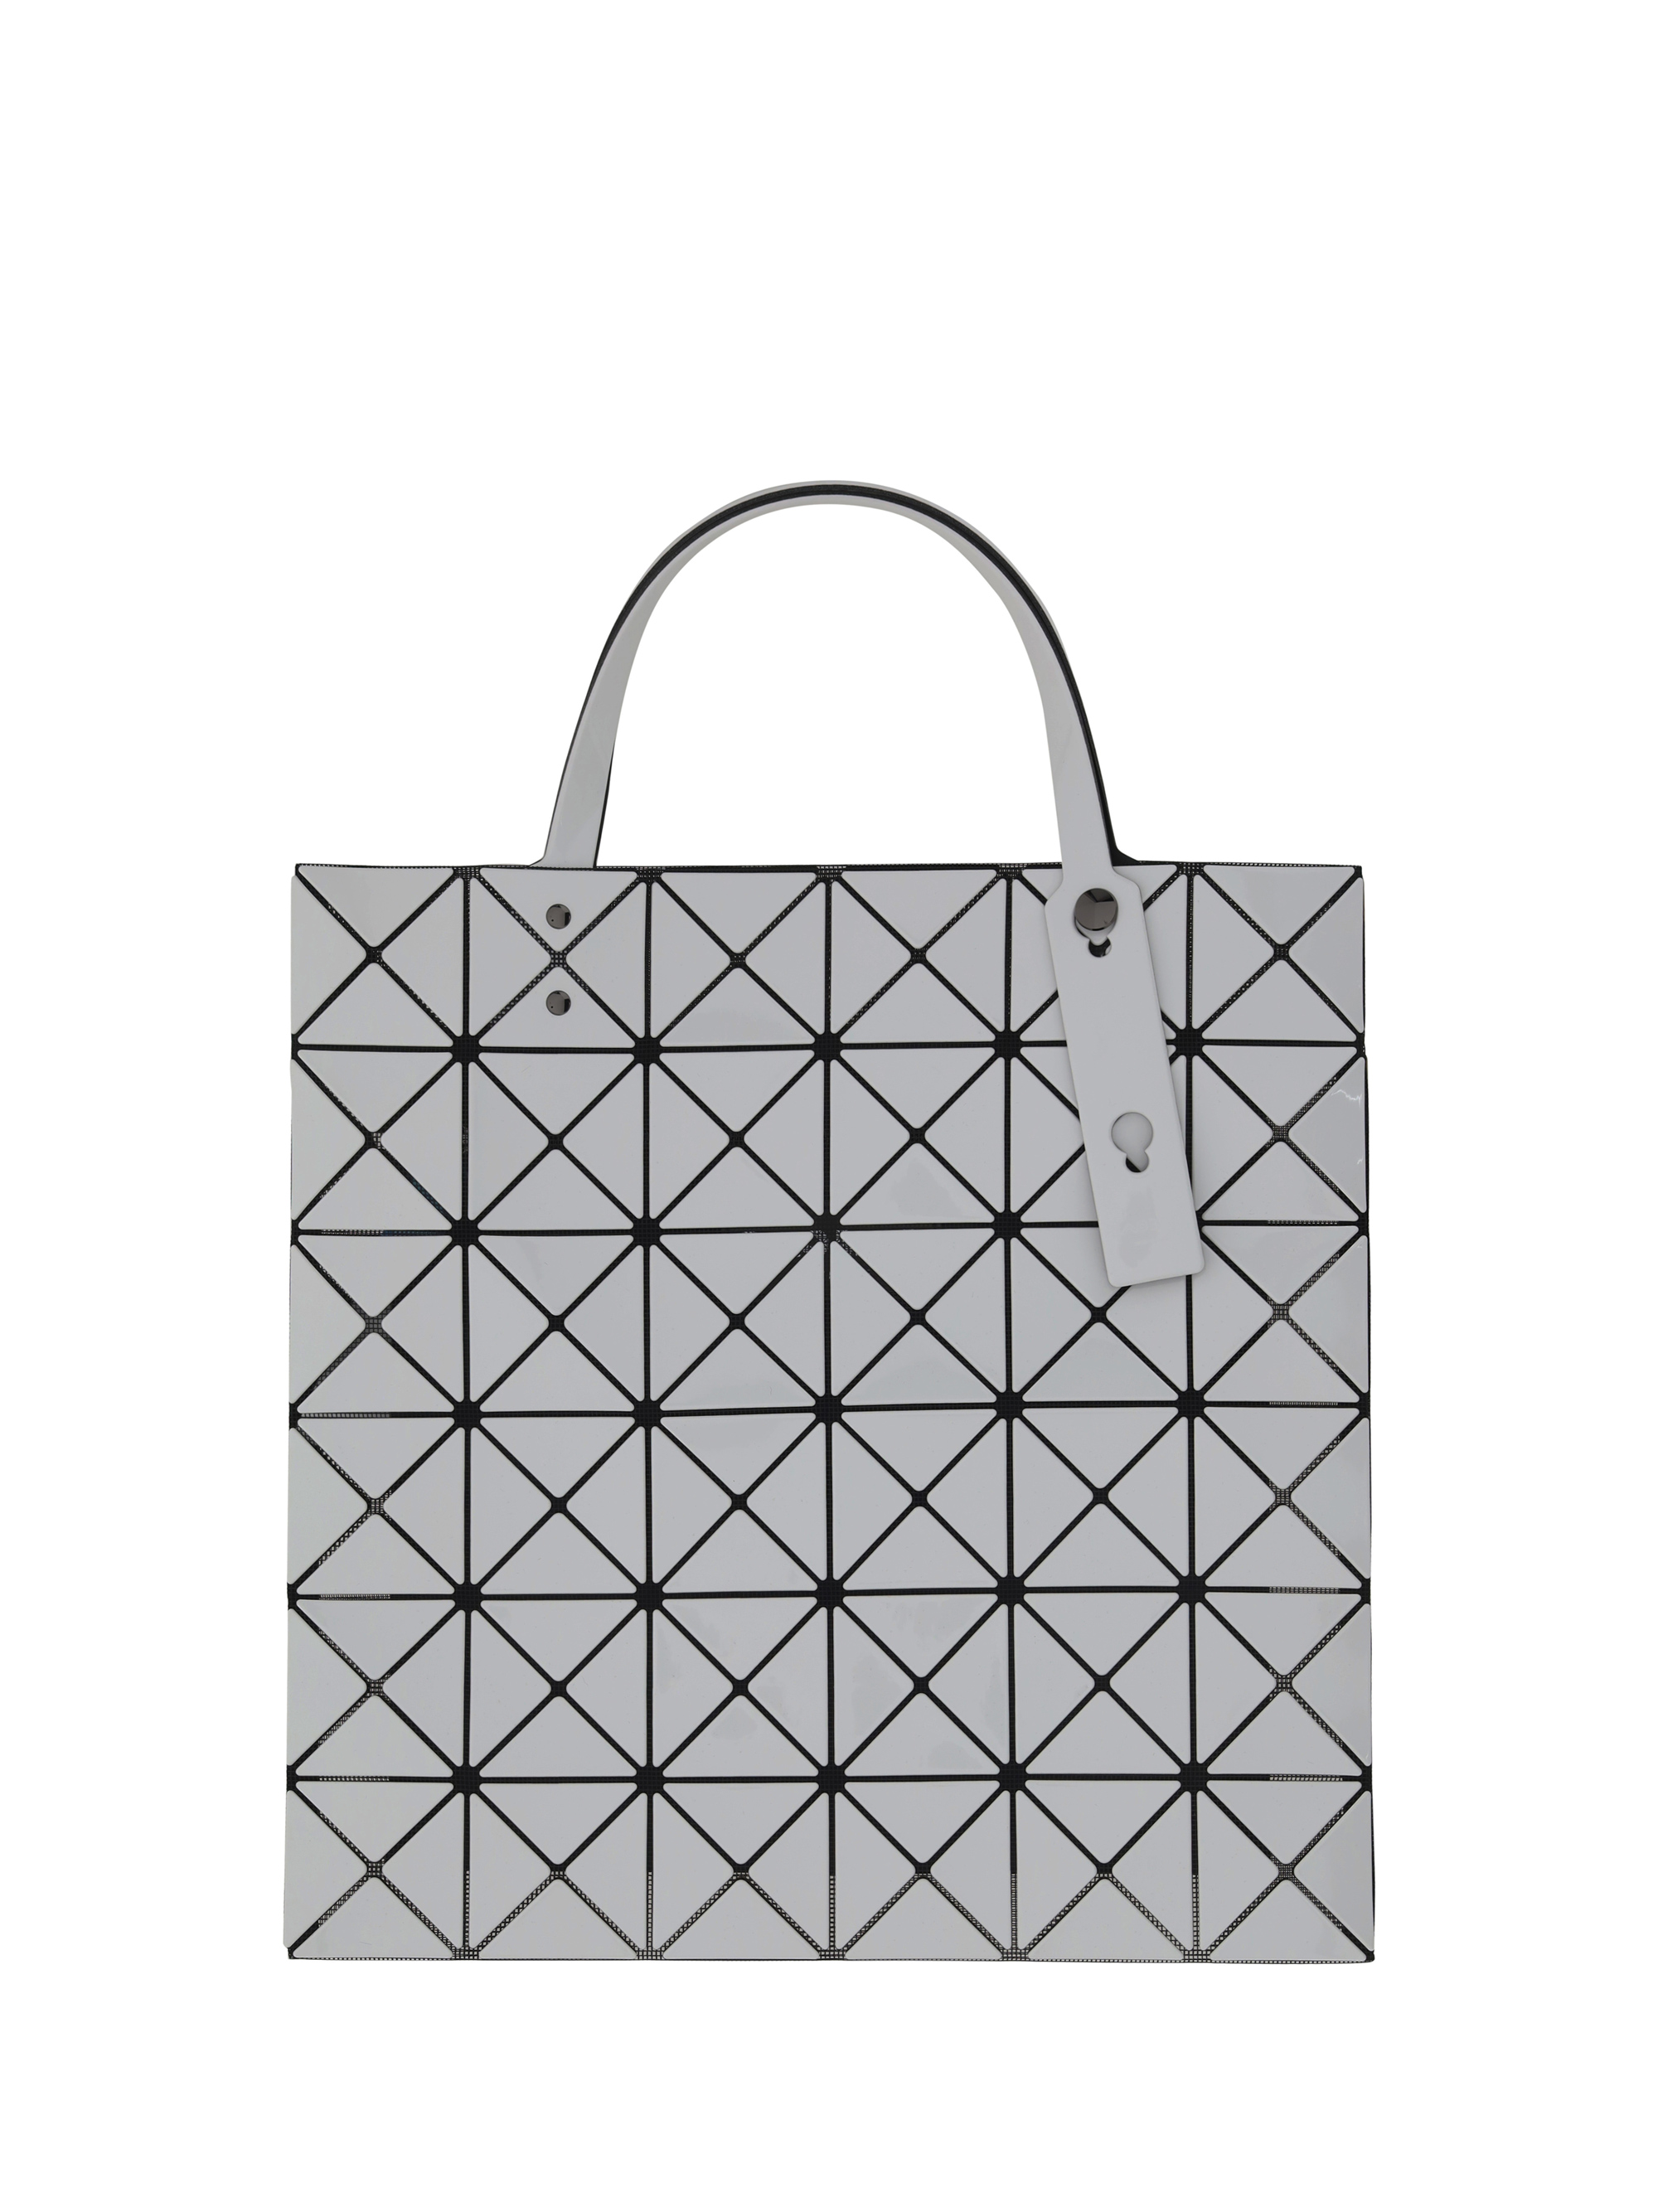 Bao Bao Lucent Handbag In Gray